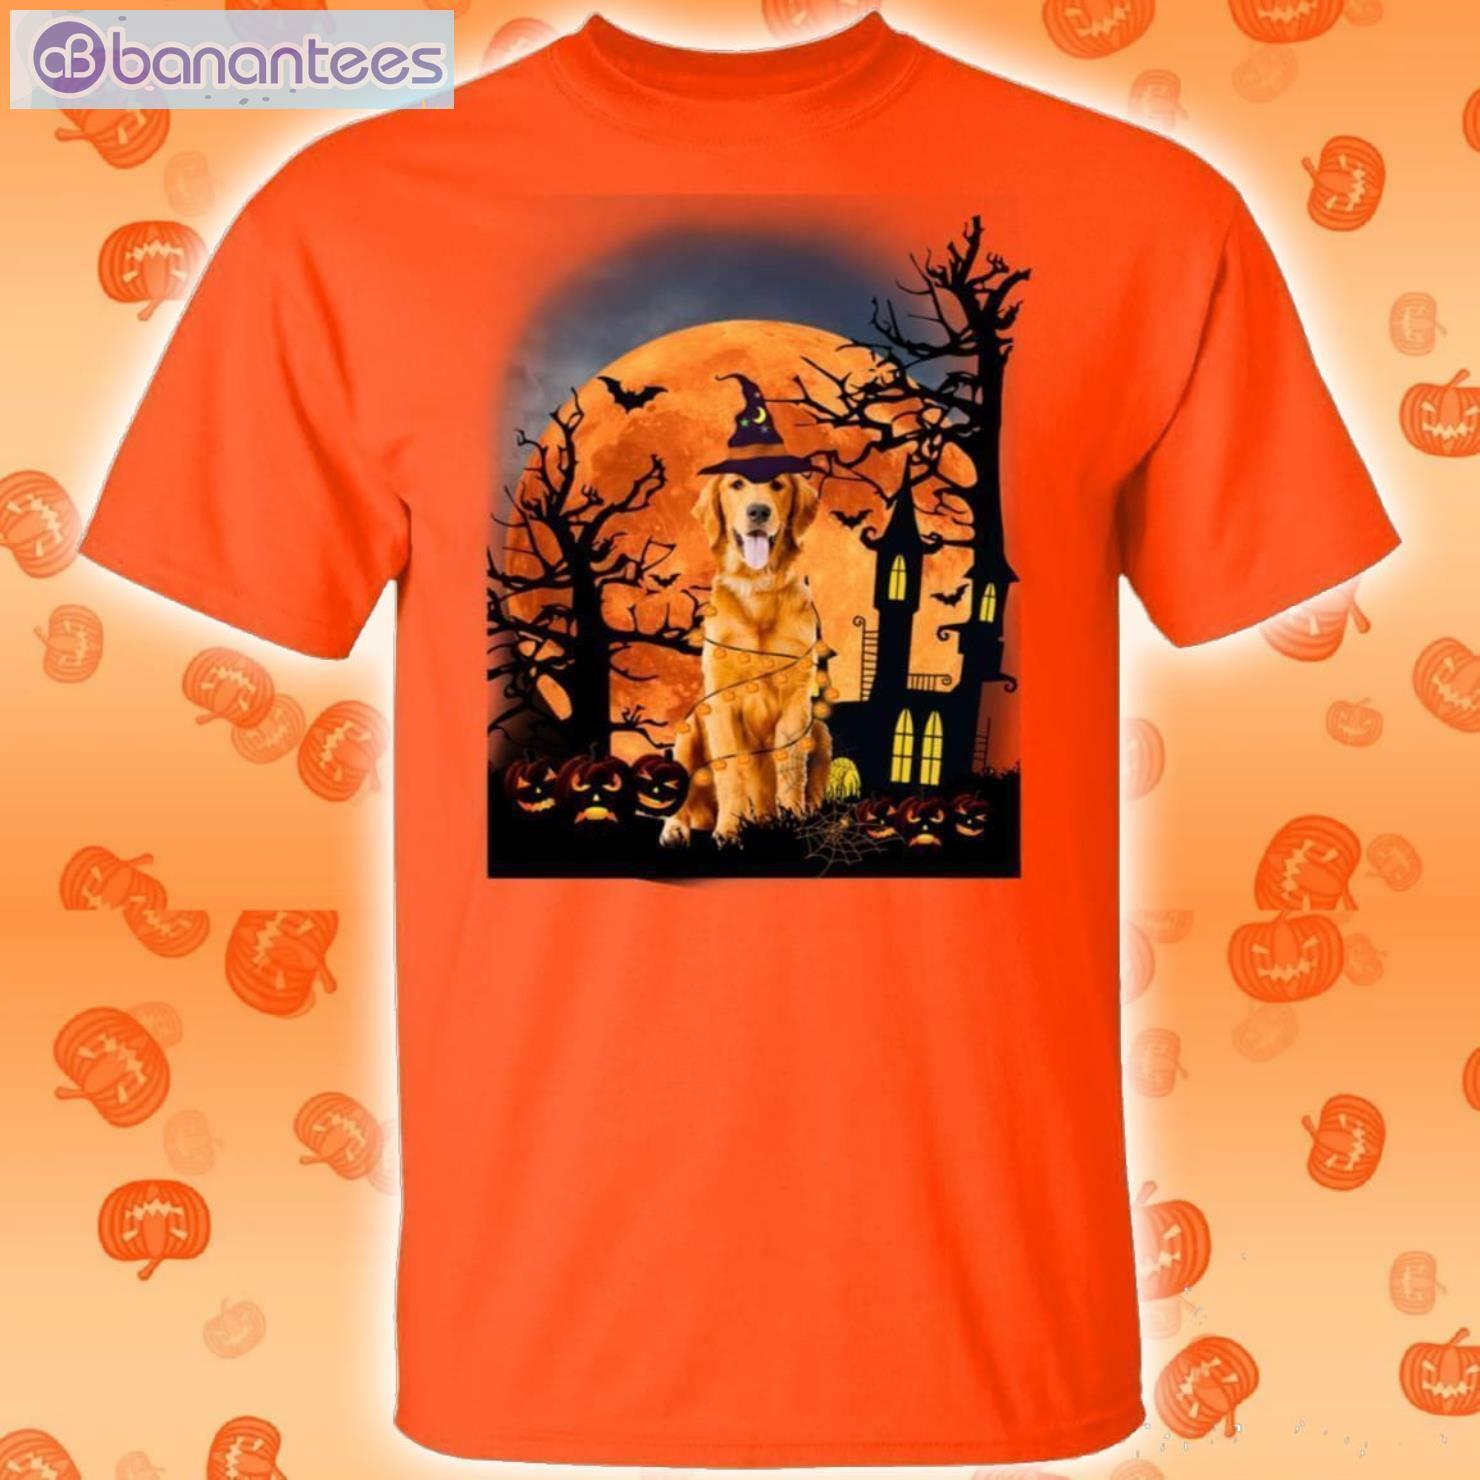 Golden Retriever By The Halloween Moon Halloween T-Shirt Product Photo 1